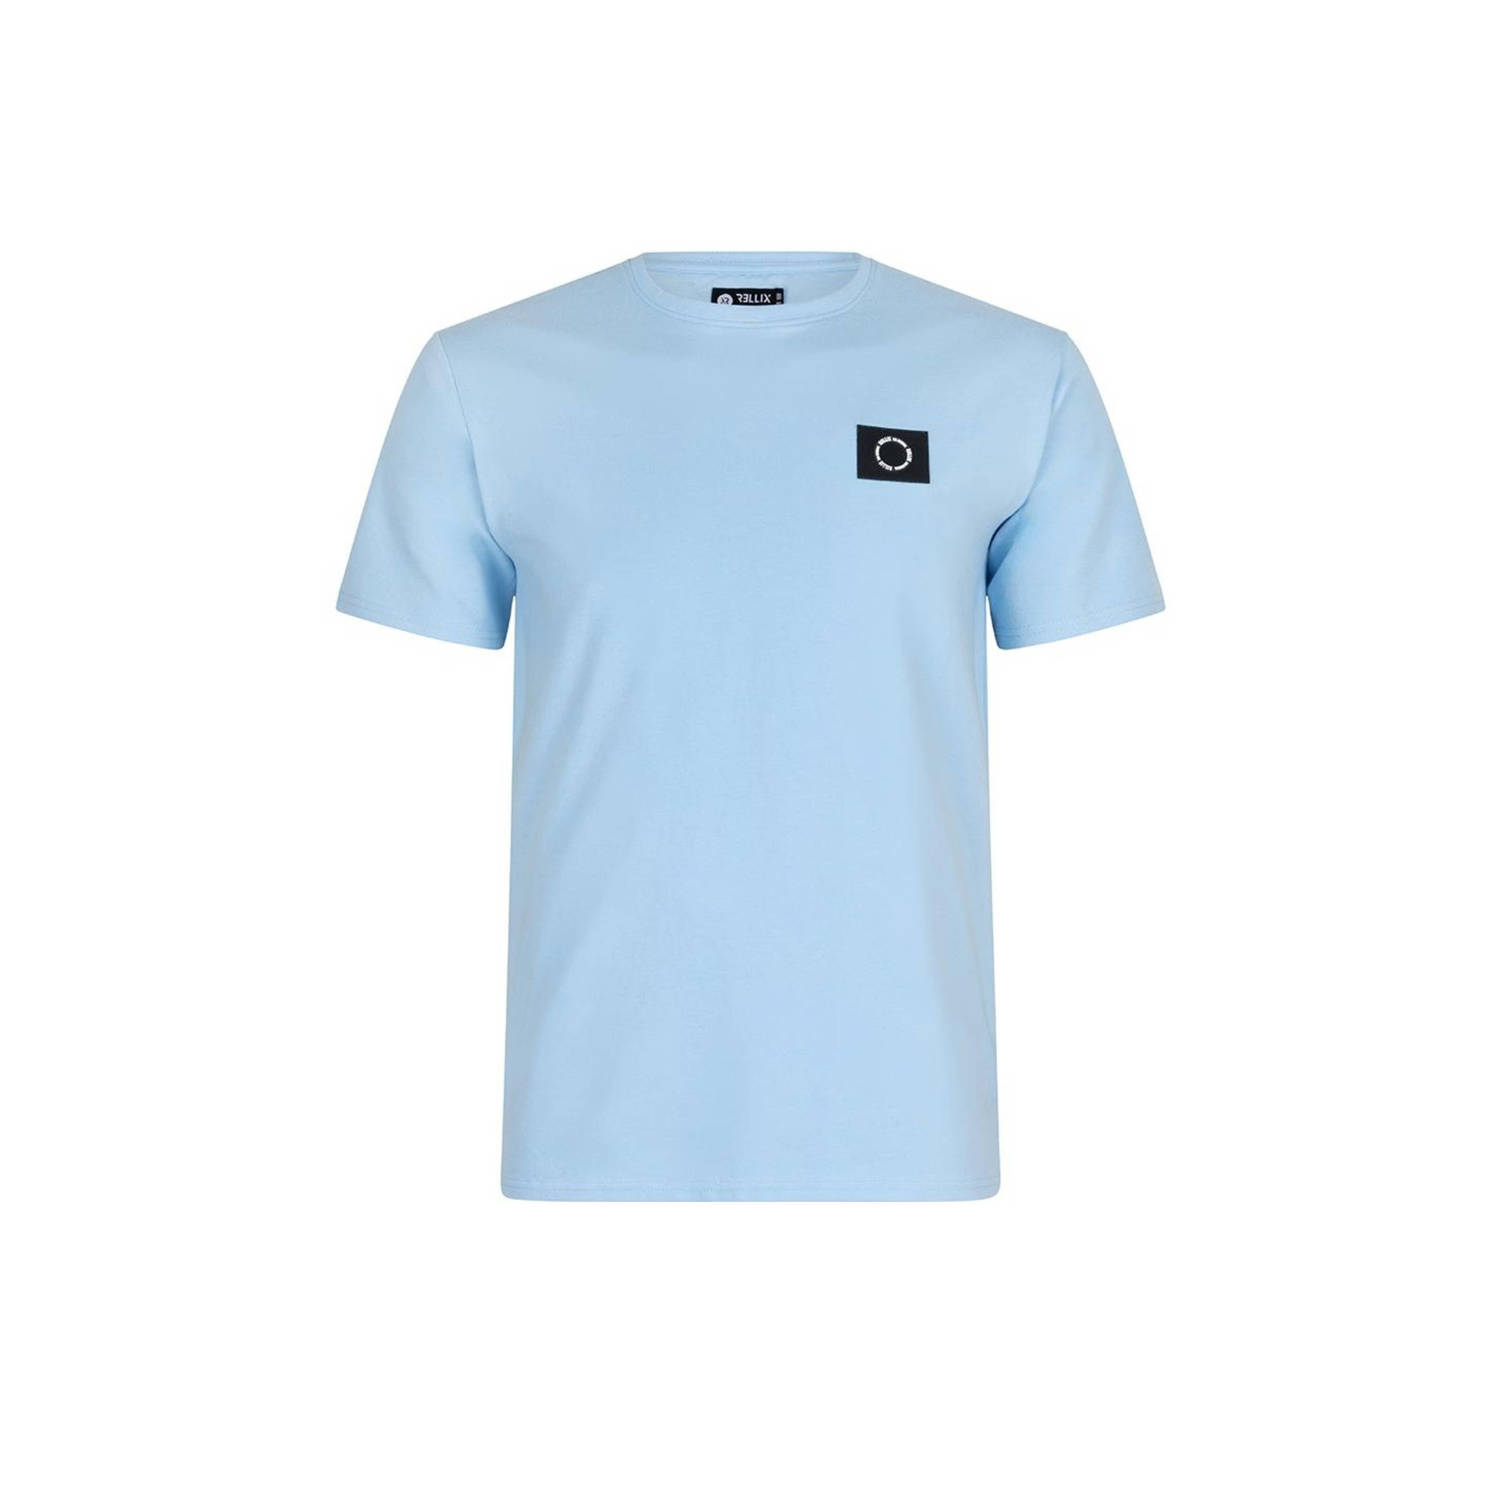 RELLIX Jongens Polo's & T-shirts T-shirt Ss Basic Blauw